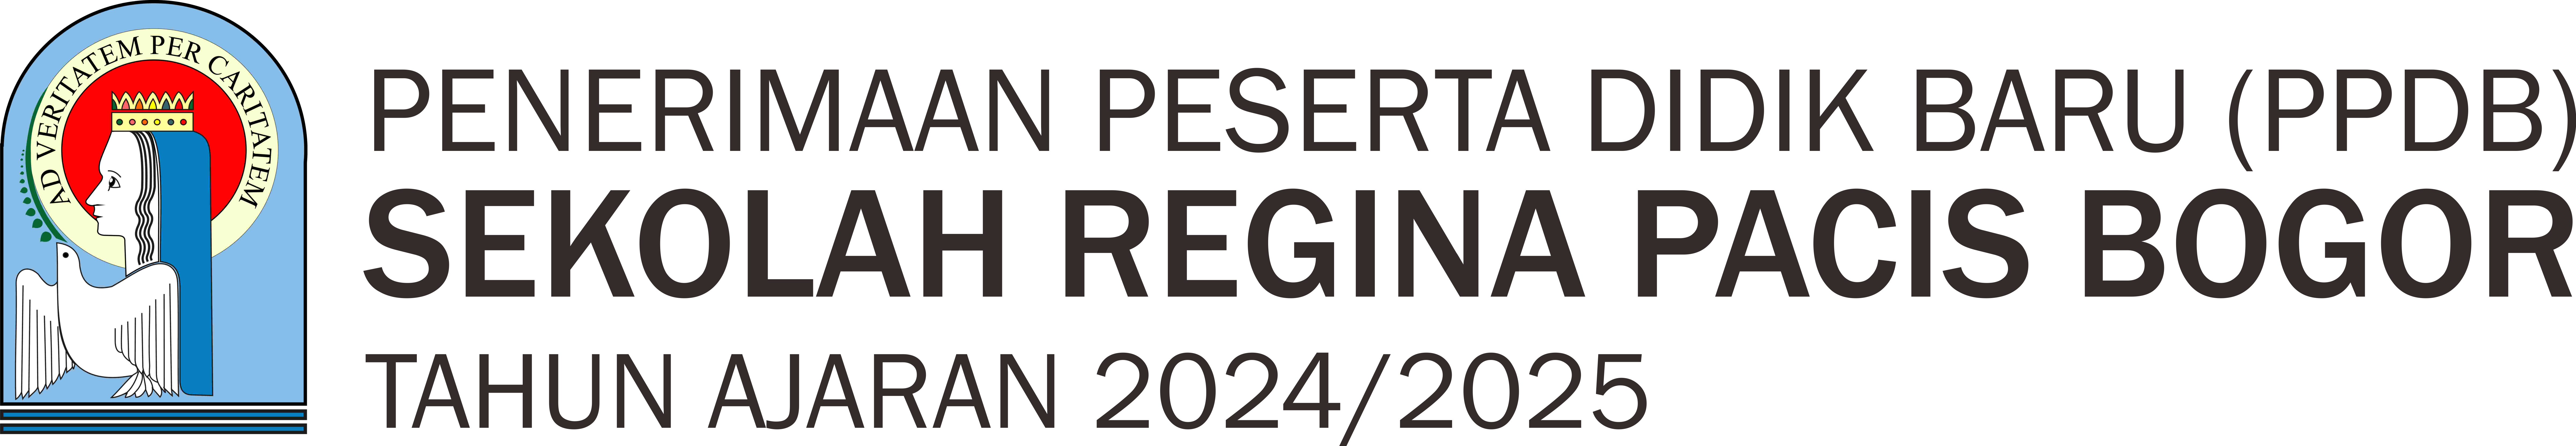 logo-rp-untuk-ppdb-2024-2025-YYS-v2